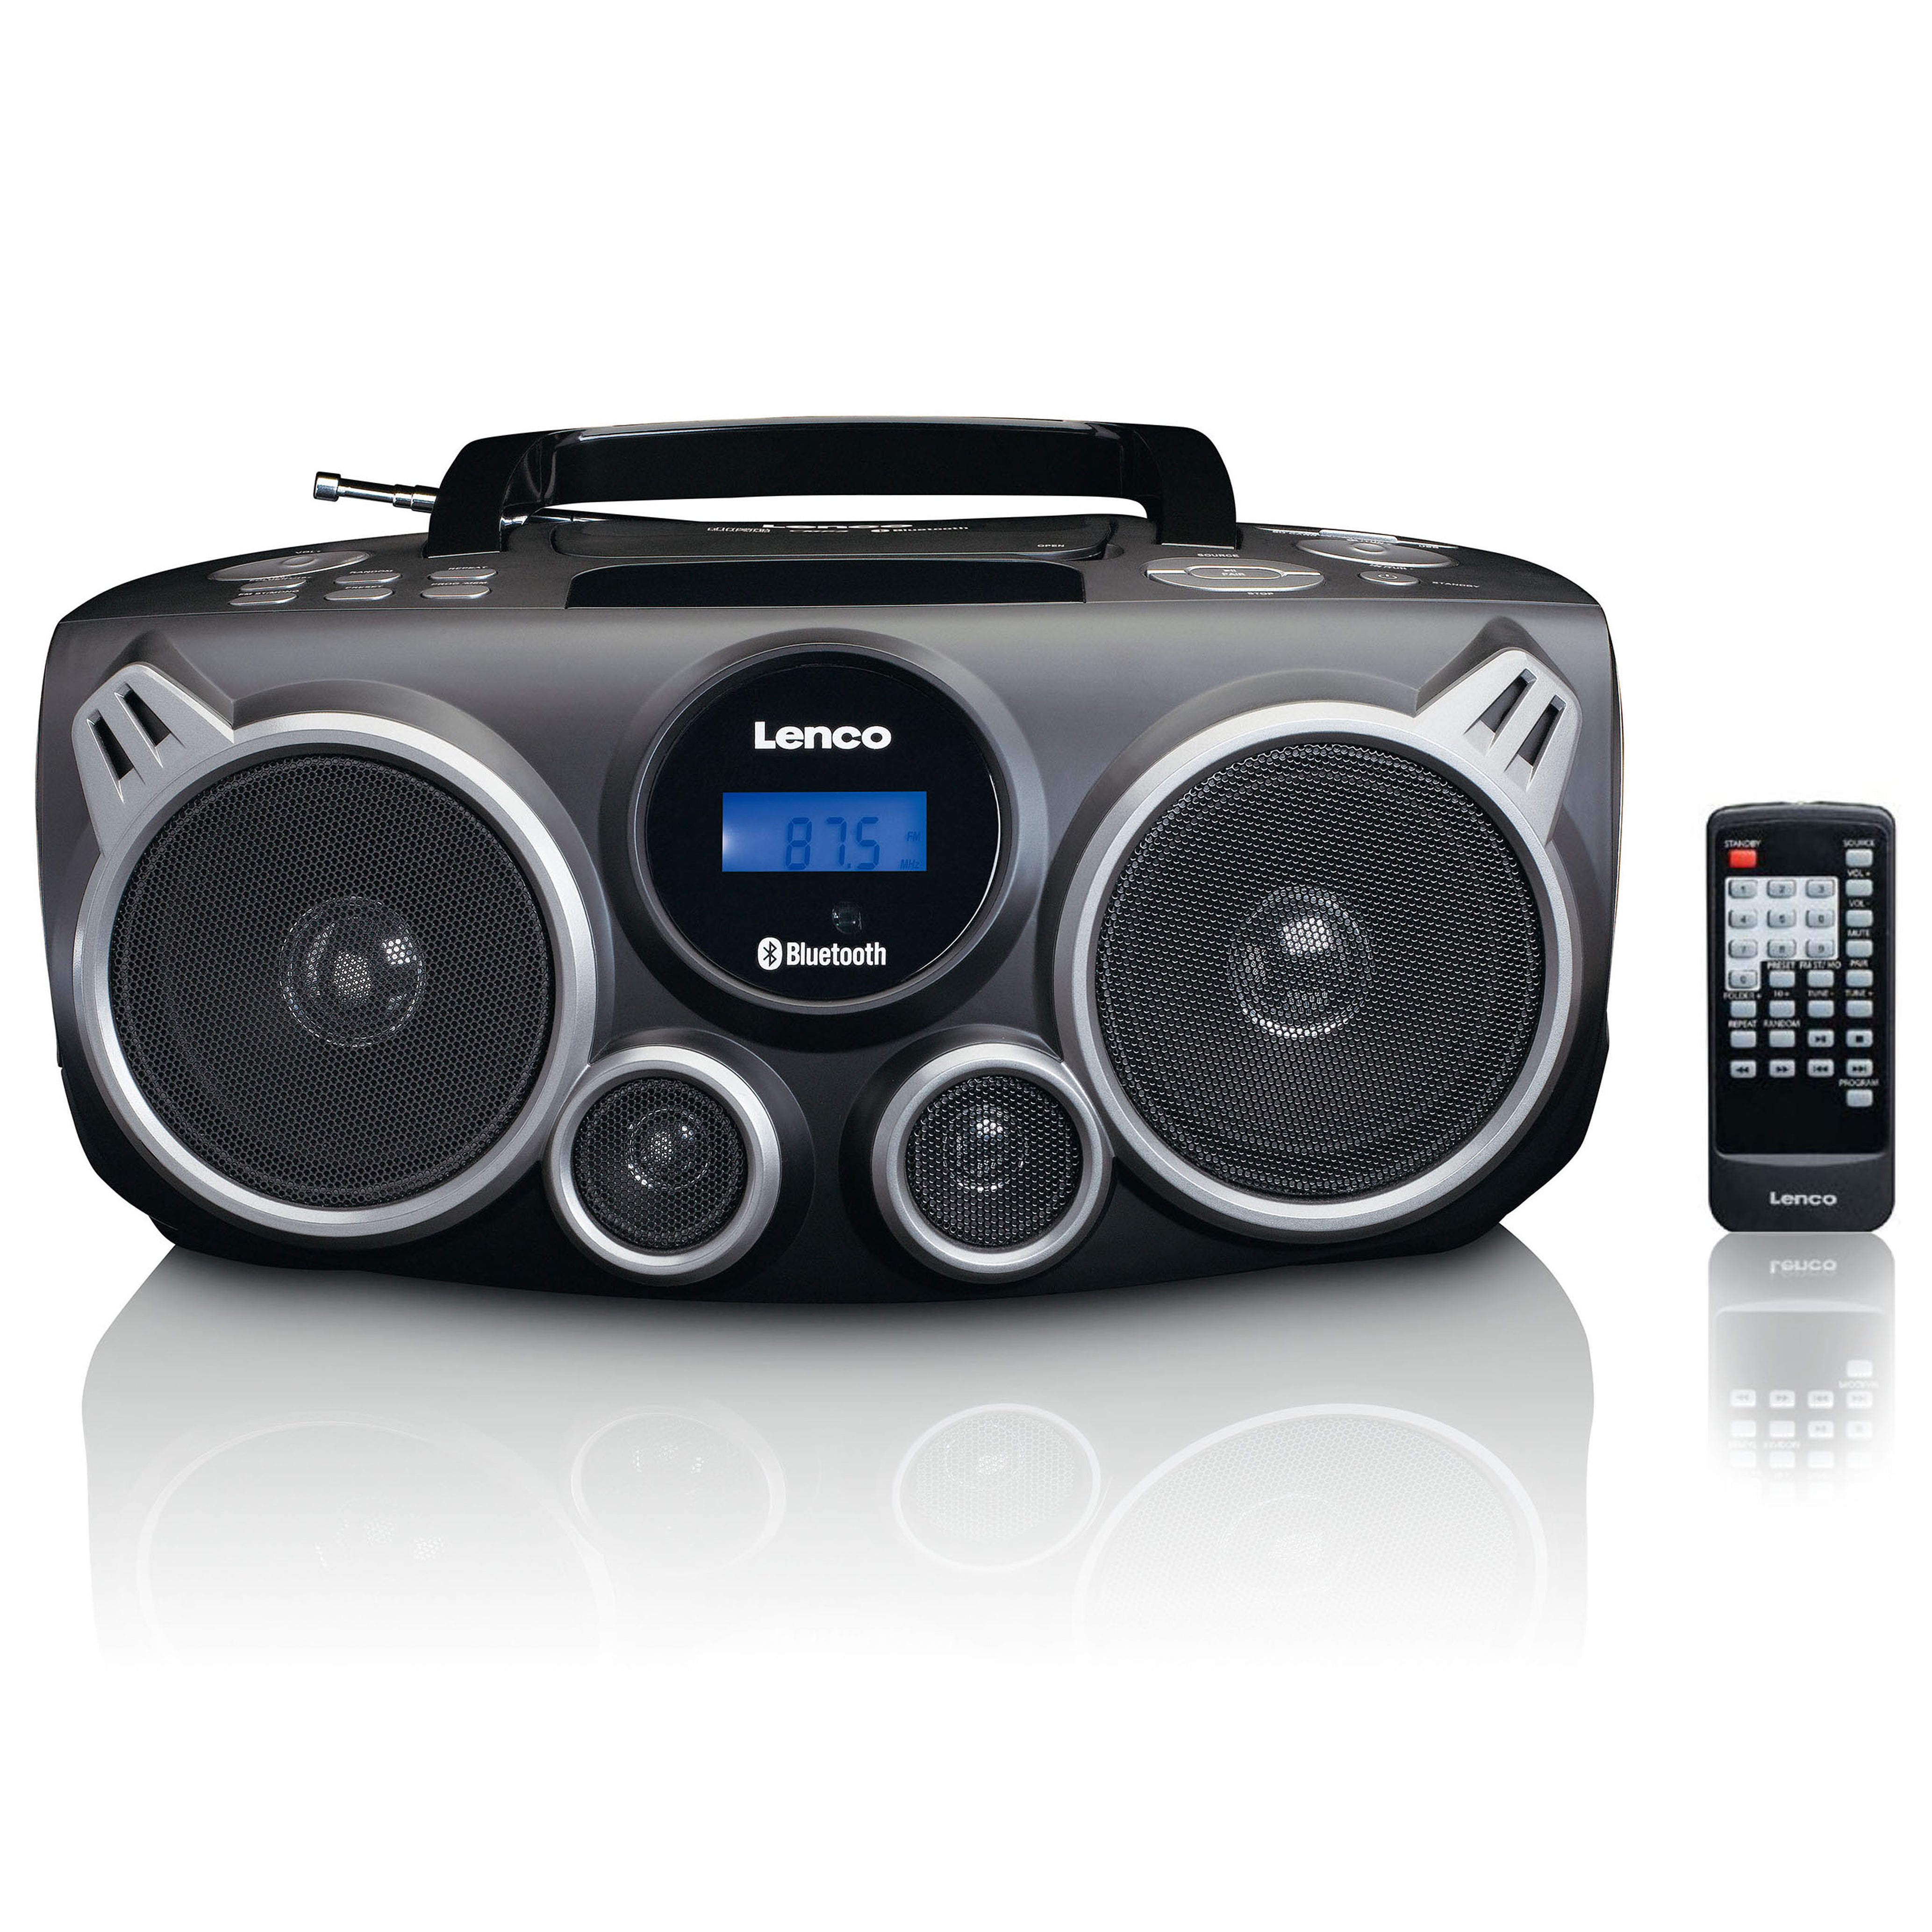 LENCO SCD-685BK and CD-player Portable USB Radio - SD-card - DAB+/FM Black with Bluetooth®